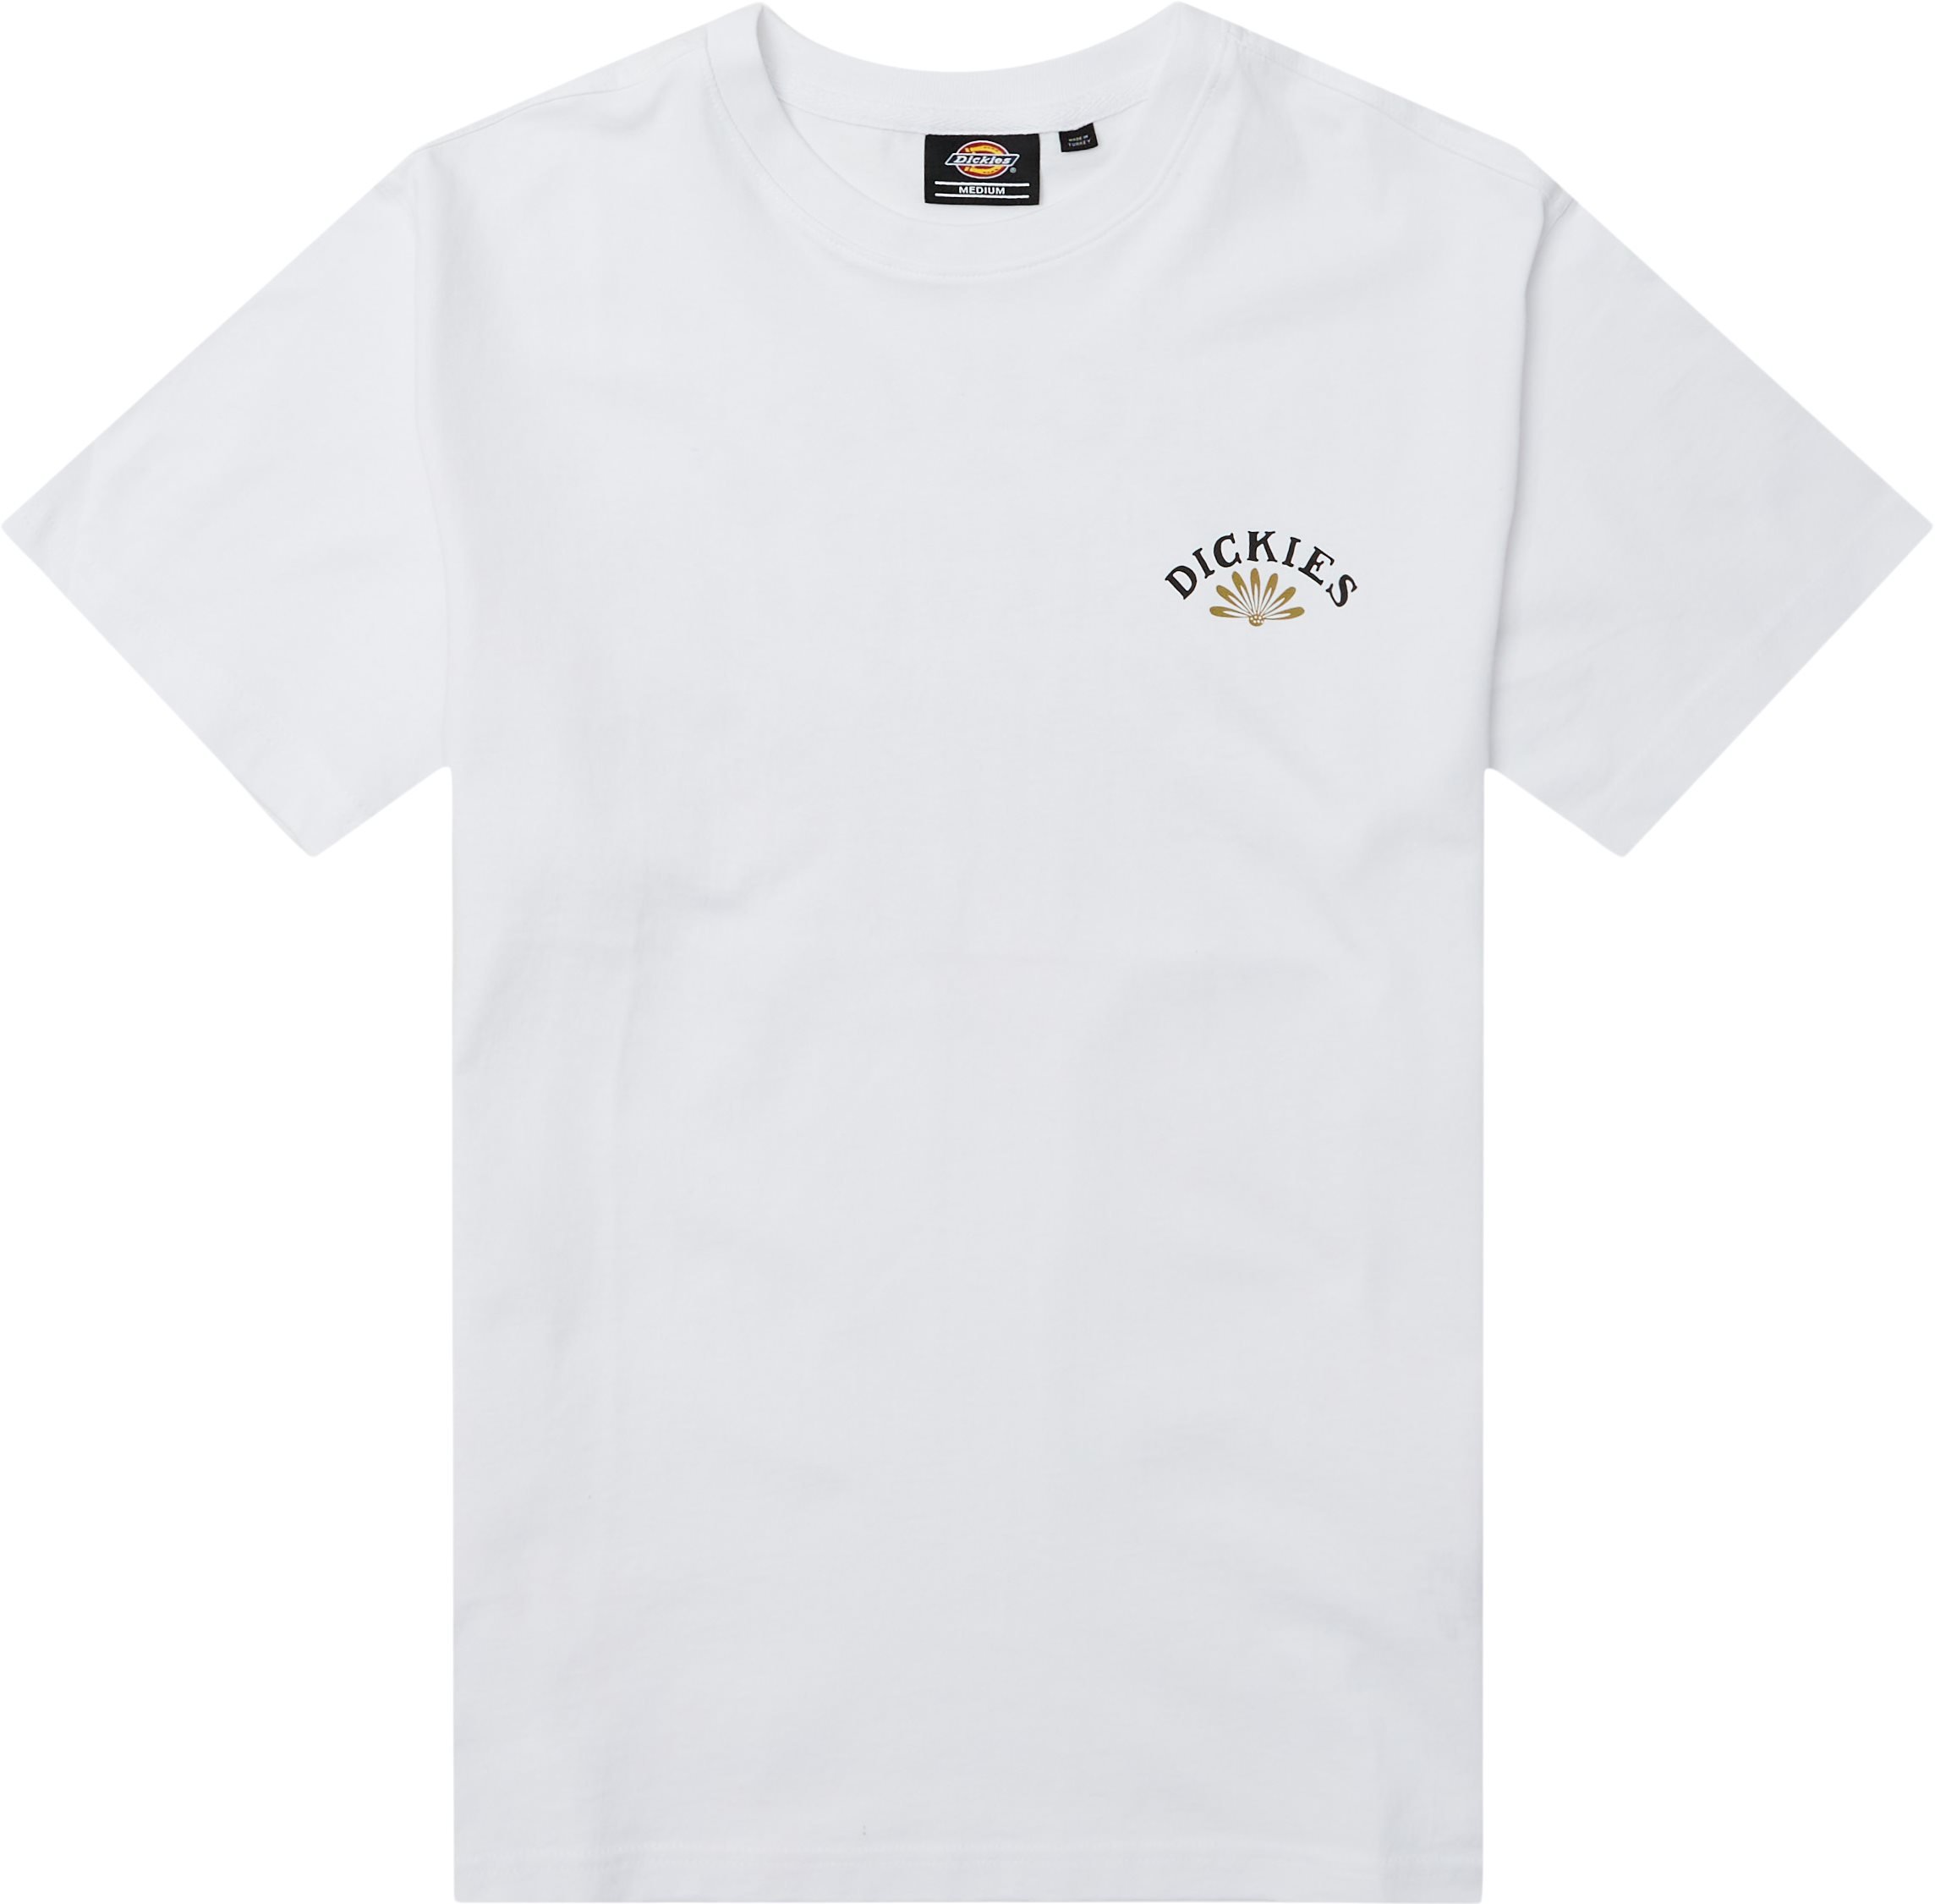 Fort Lewis Tee - T-shirts - Regular fit - Vit